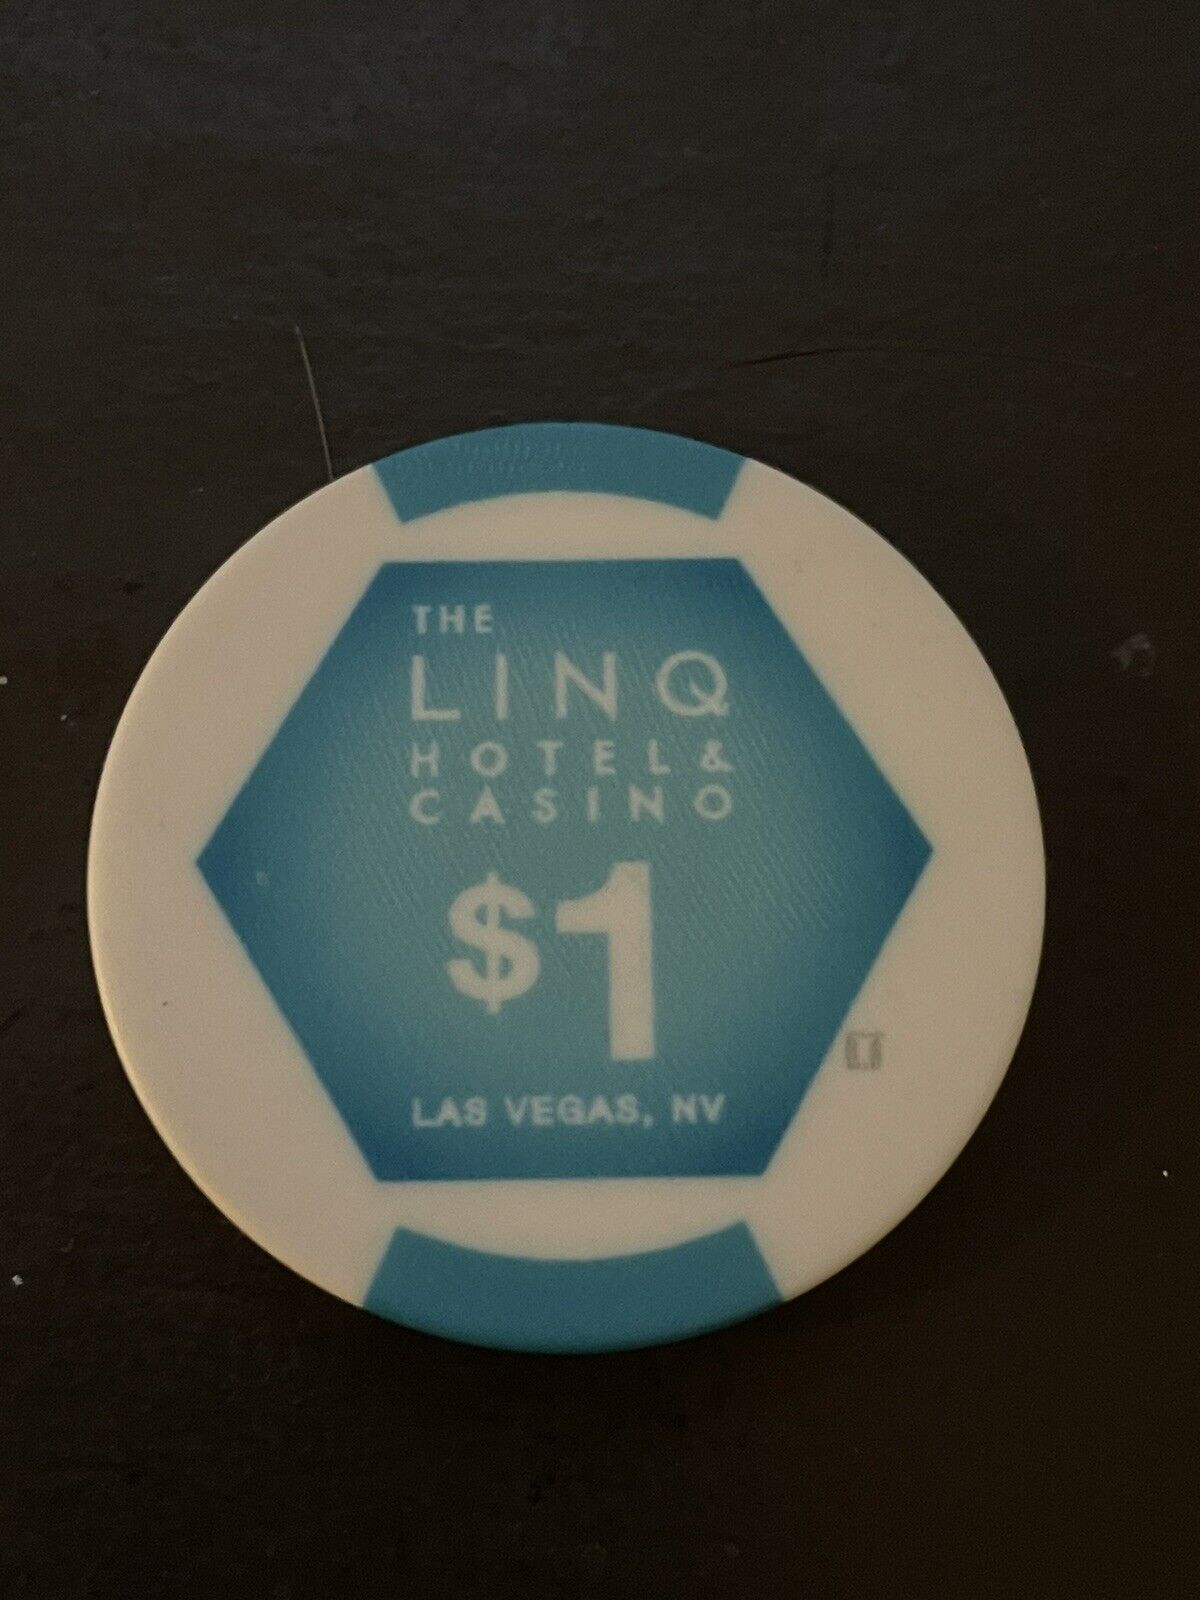 The LINQ Hotel & Casino $1 Poker Chip Las Vegas, NV 